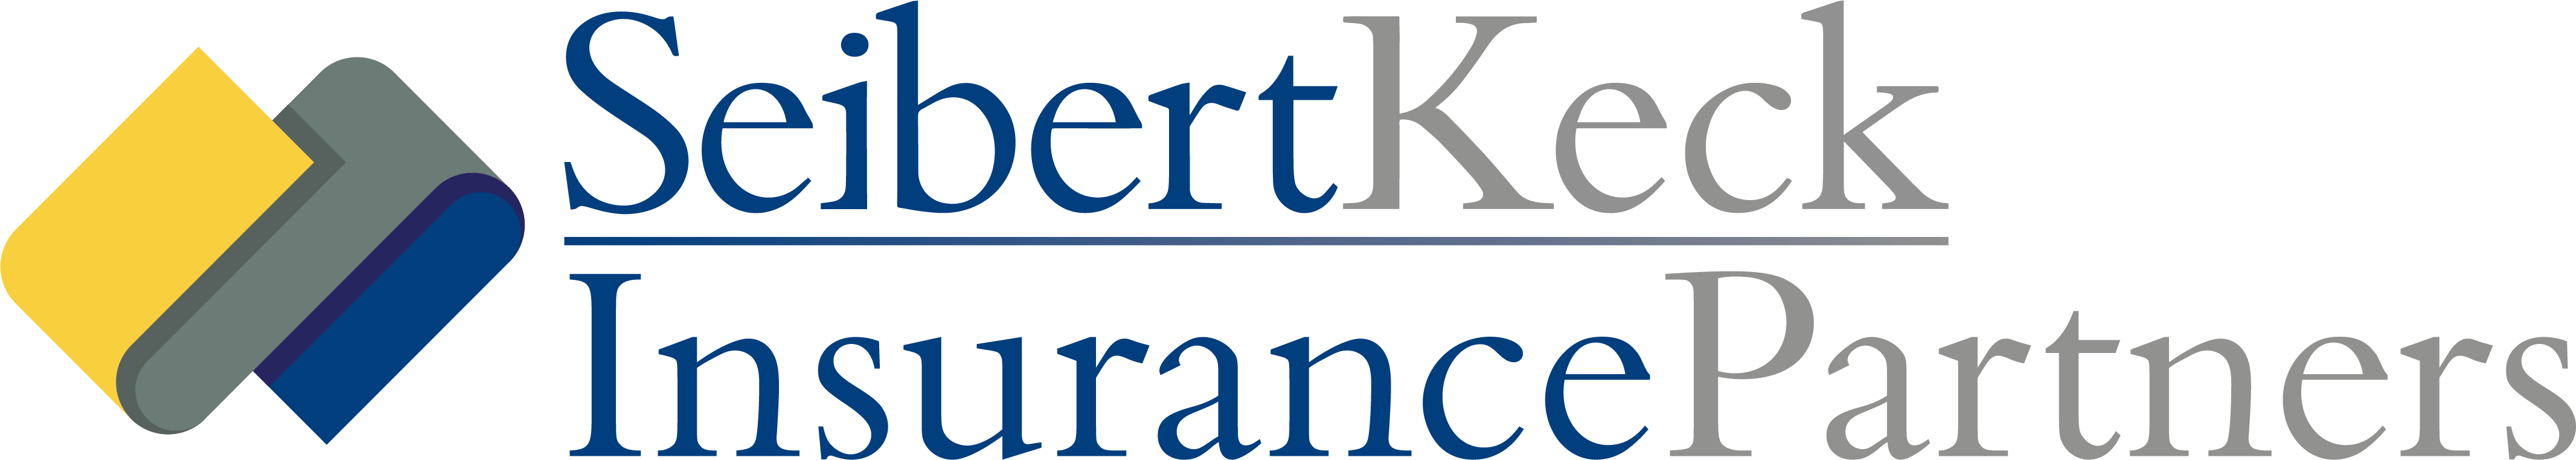 SeibertKeck Insurance